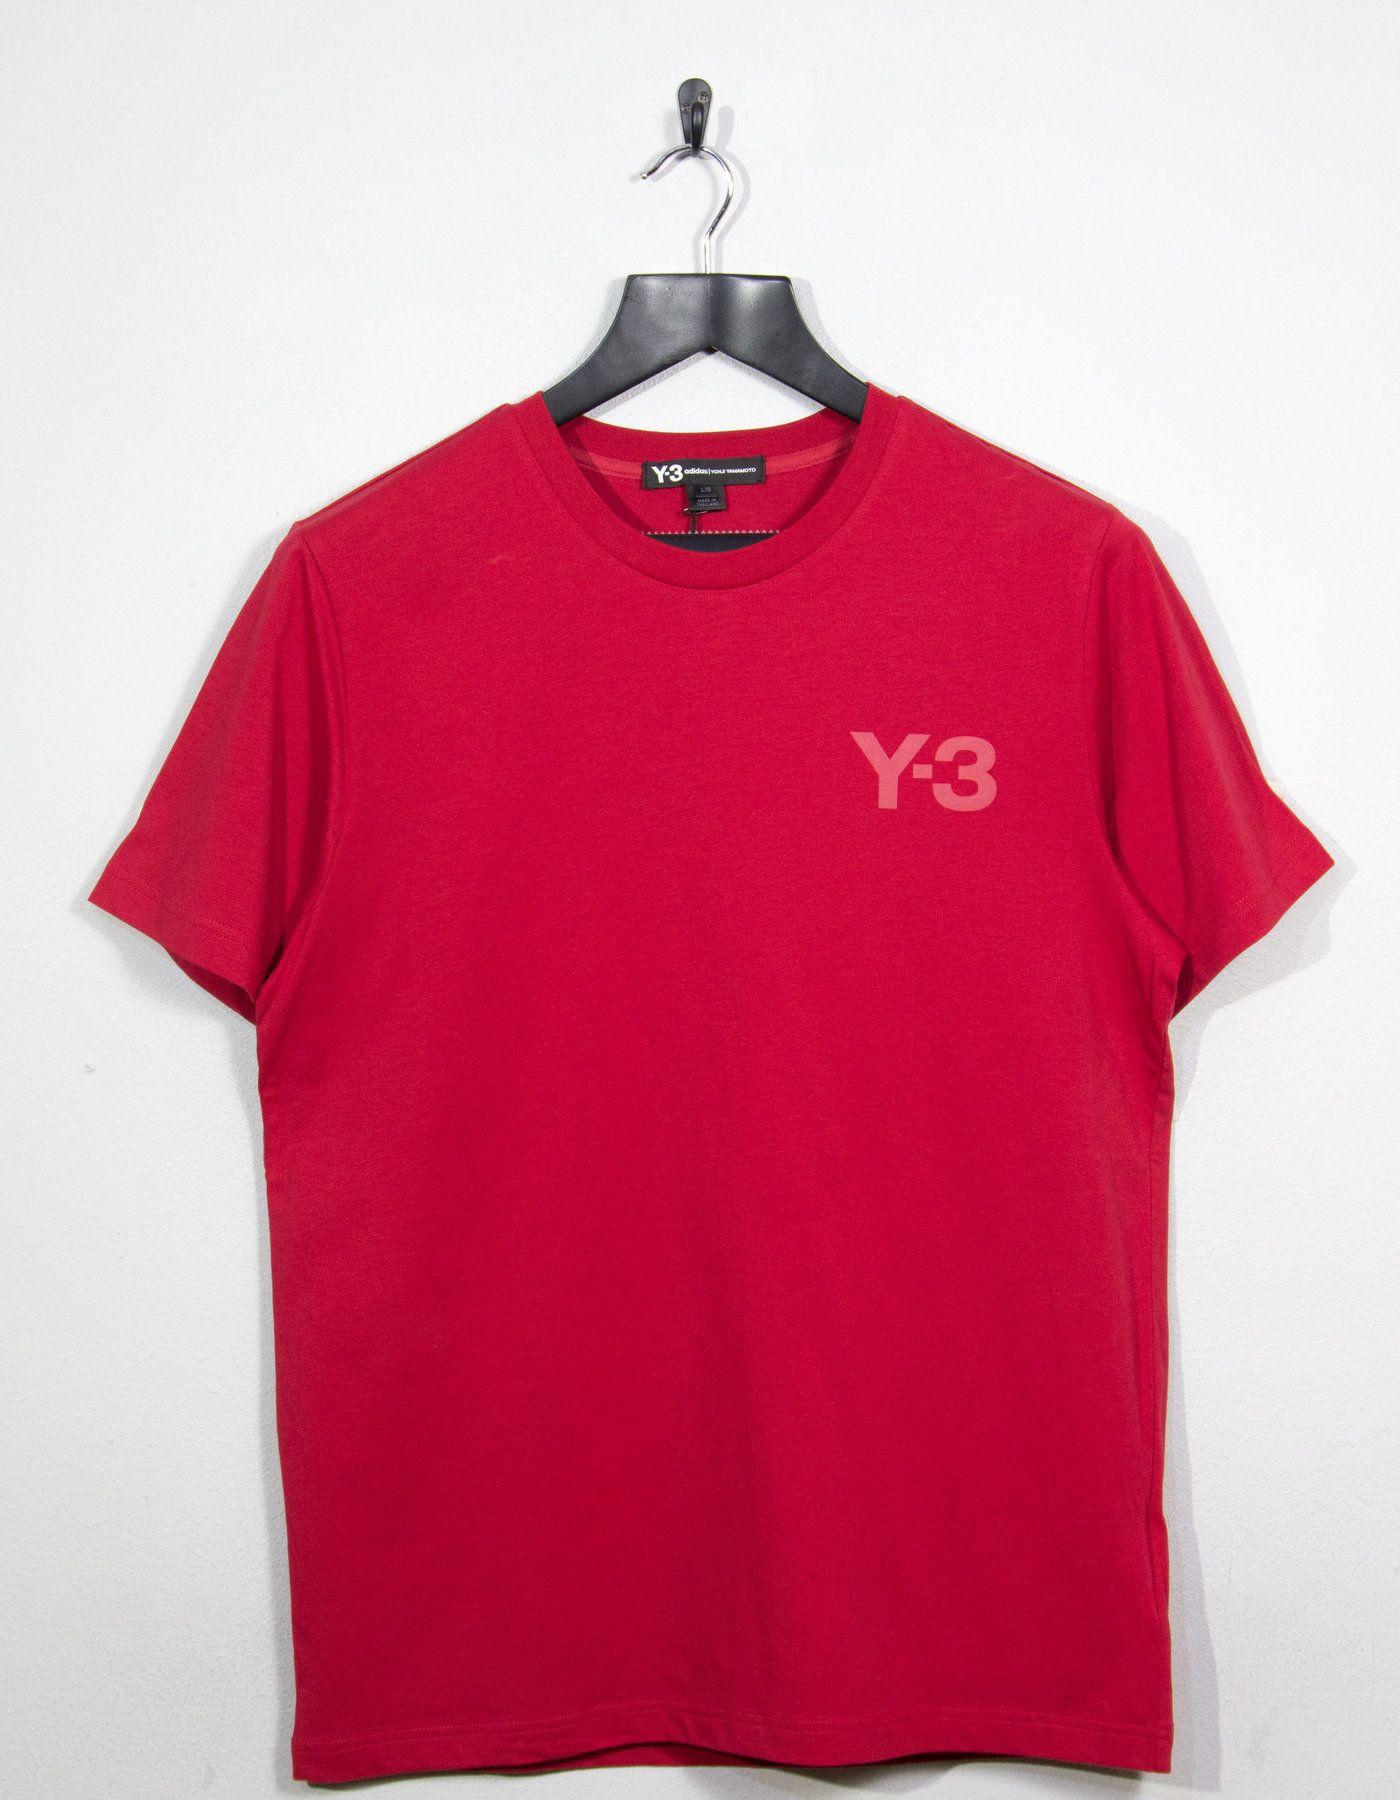 White and Red Y Logo - Adidas y-3 classic logo t-shirt red | Manifesto